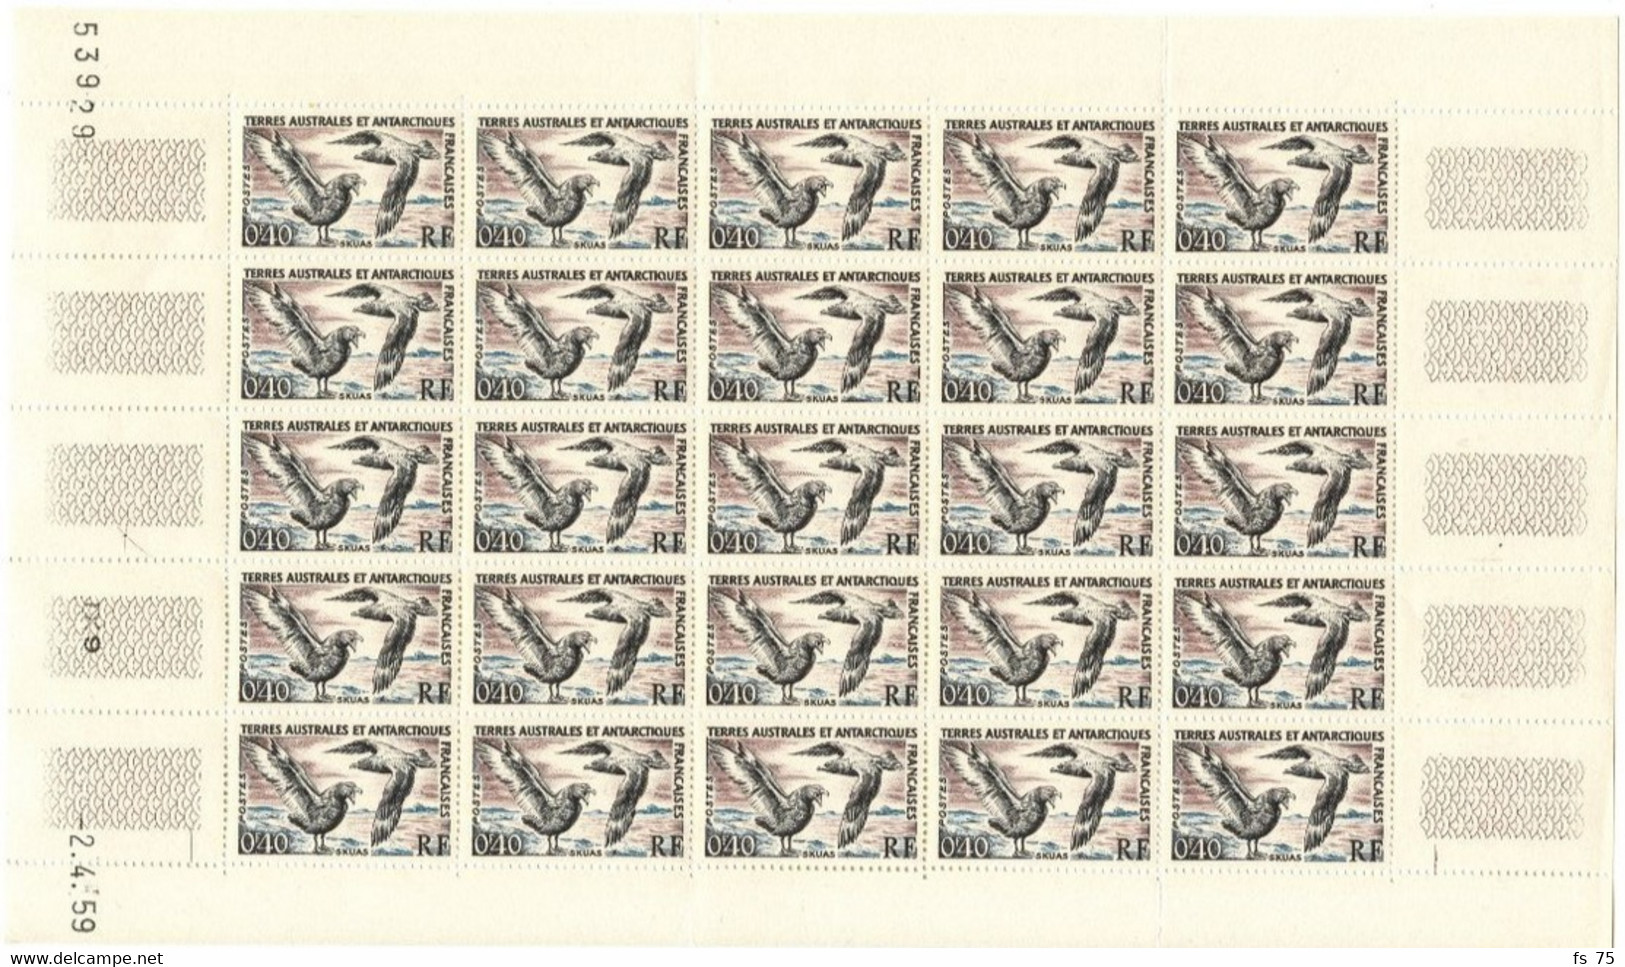 T.A.A.F. 13 - SKUAS - LOT DE 12 FEUILLES COIN DATE - DATES DIFFERENTES ENTRE 1959 A 1962 - Unused Stamps